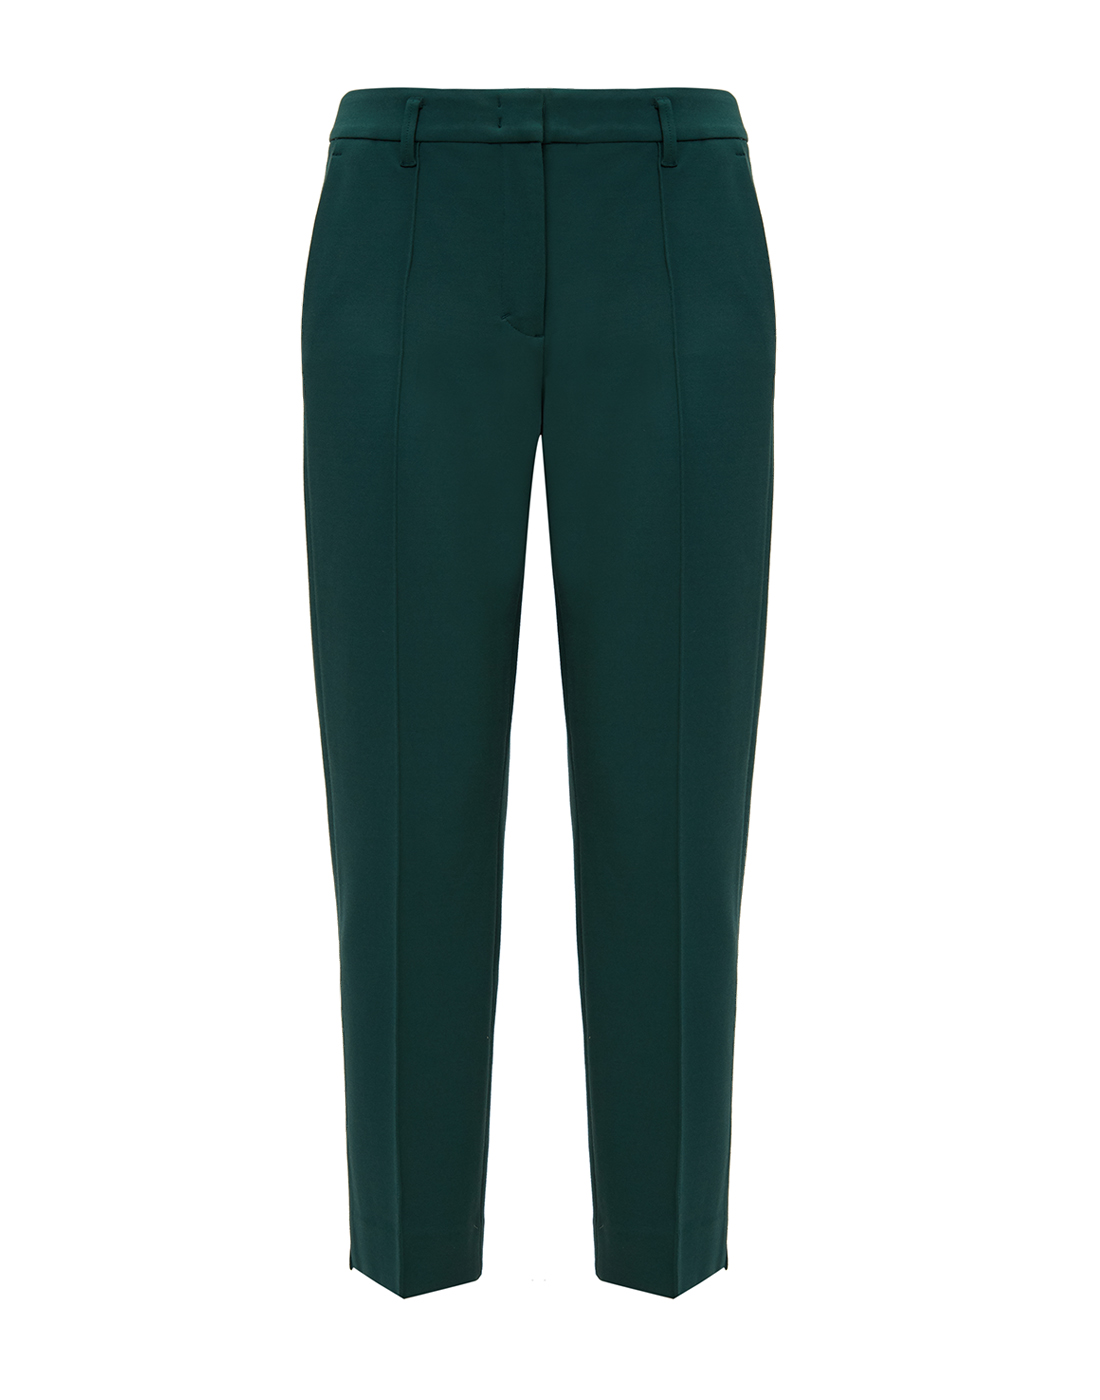 Женские зеленые брюки Dorothee Schumacher S948003/569-1